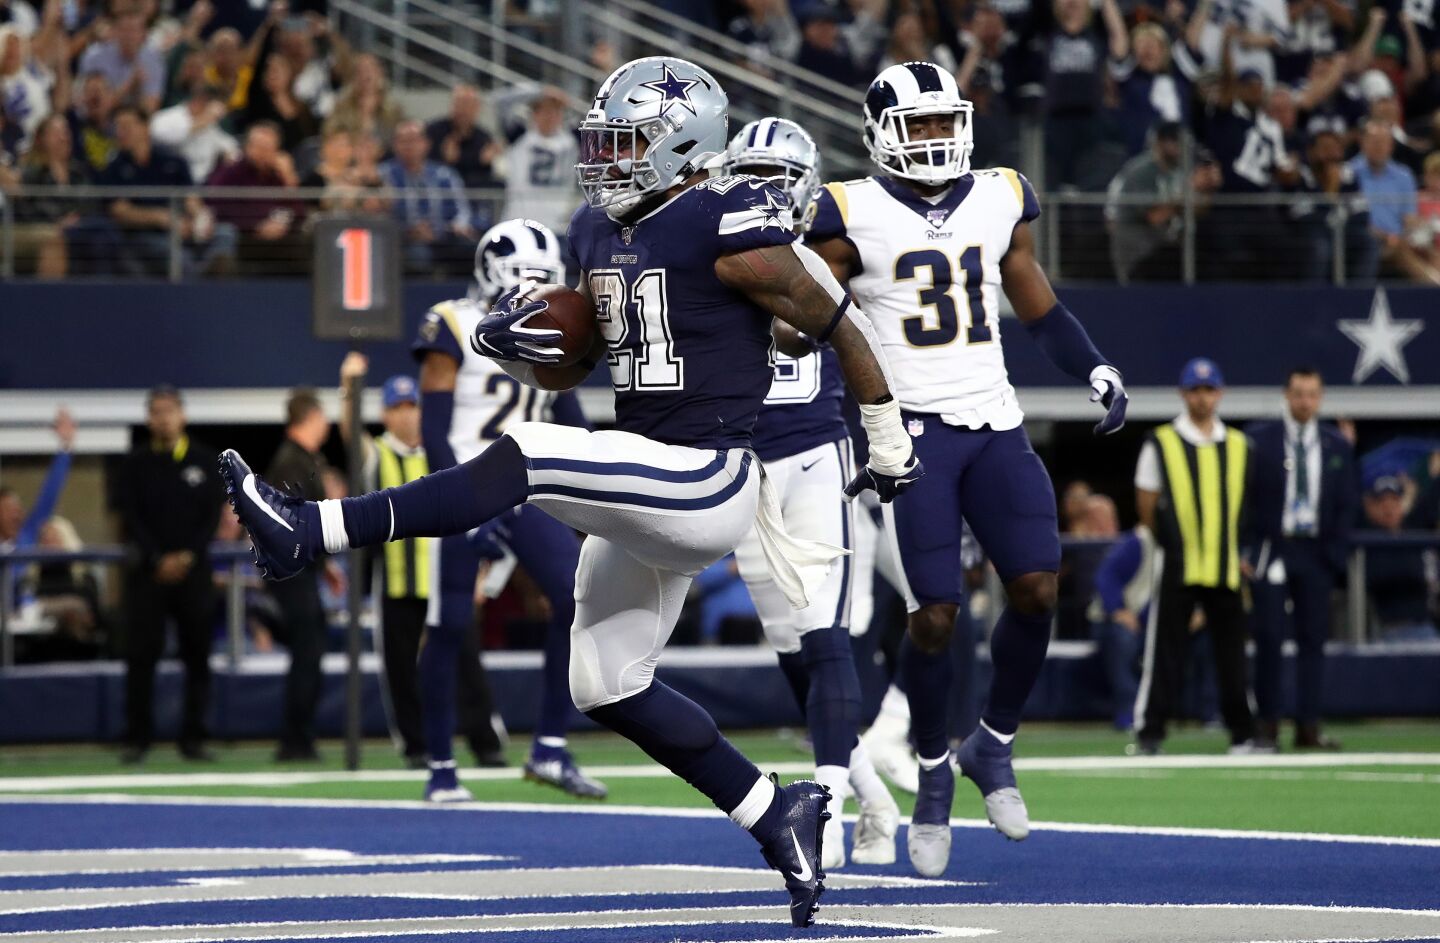 Dallas Cowboys running back Ezekiel Elliott scores a touchdown against the Rams in the second quarter.